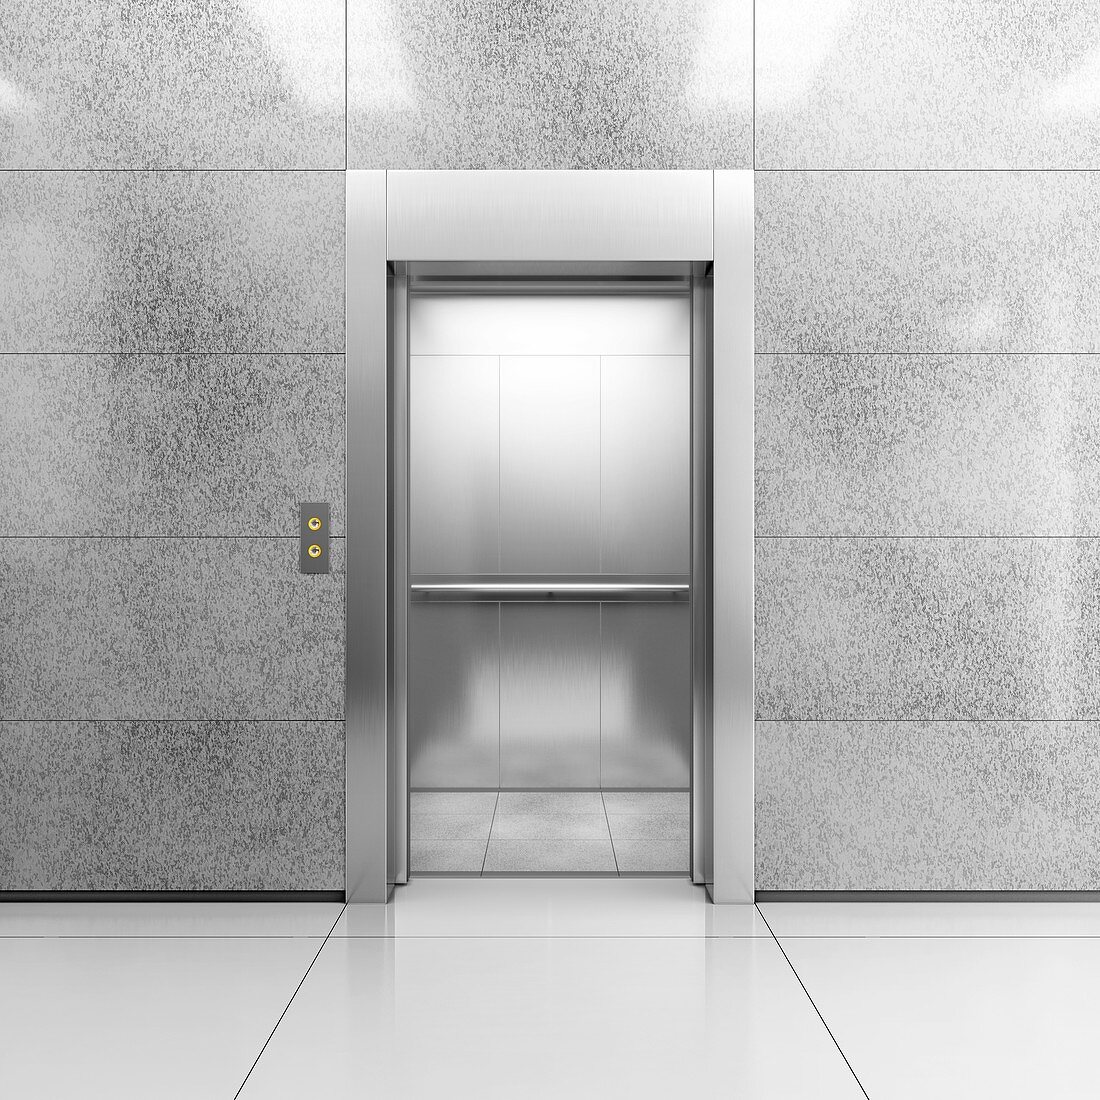 Modern steel elevator, illustration